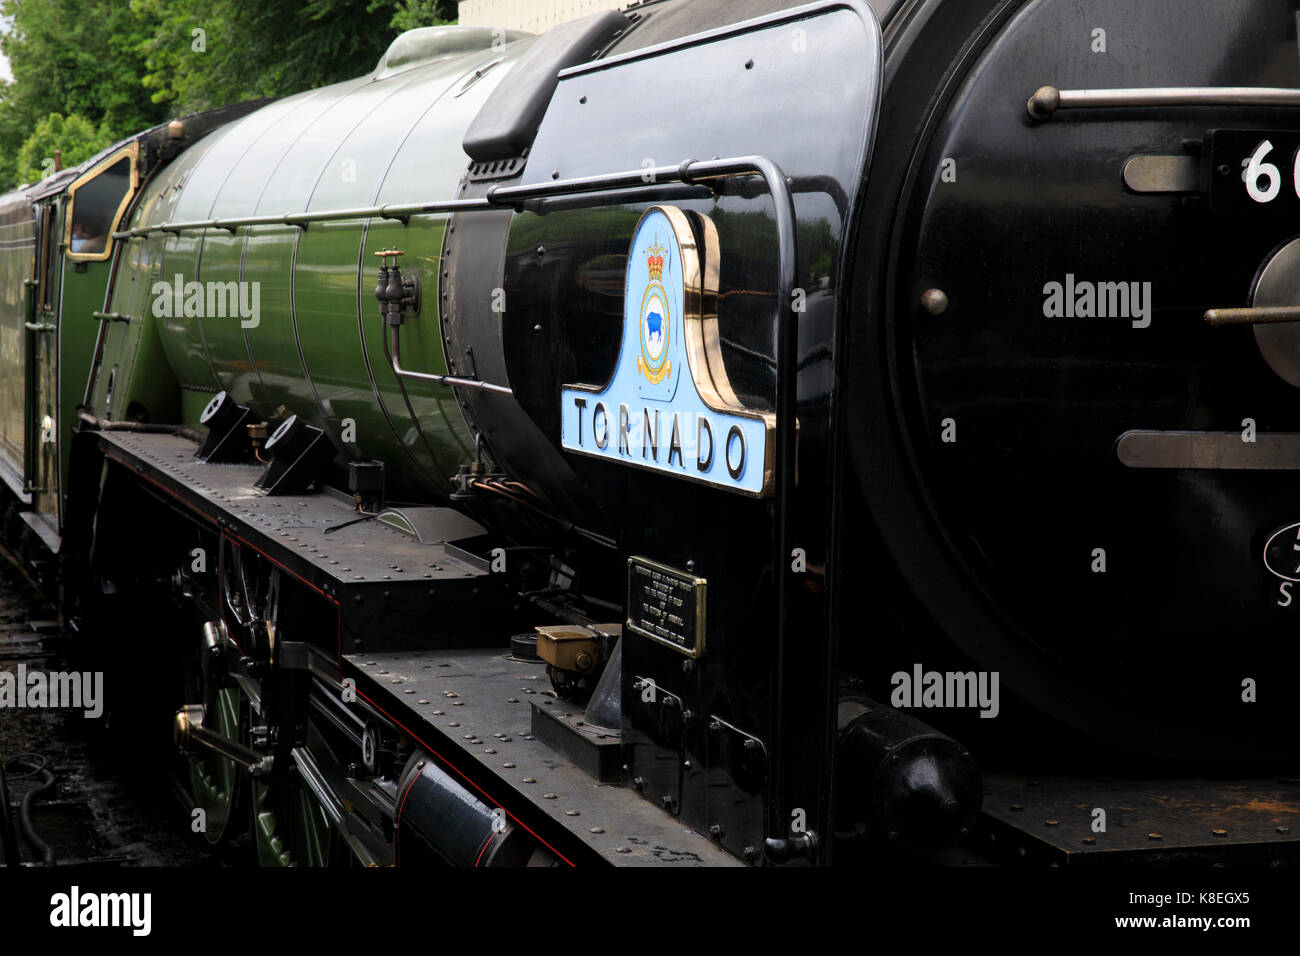 Tornado Steam Locomotive in Cornwall Stock Photo